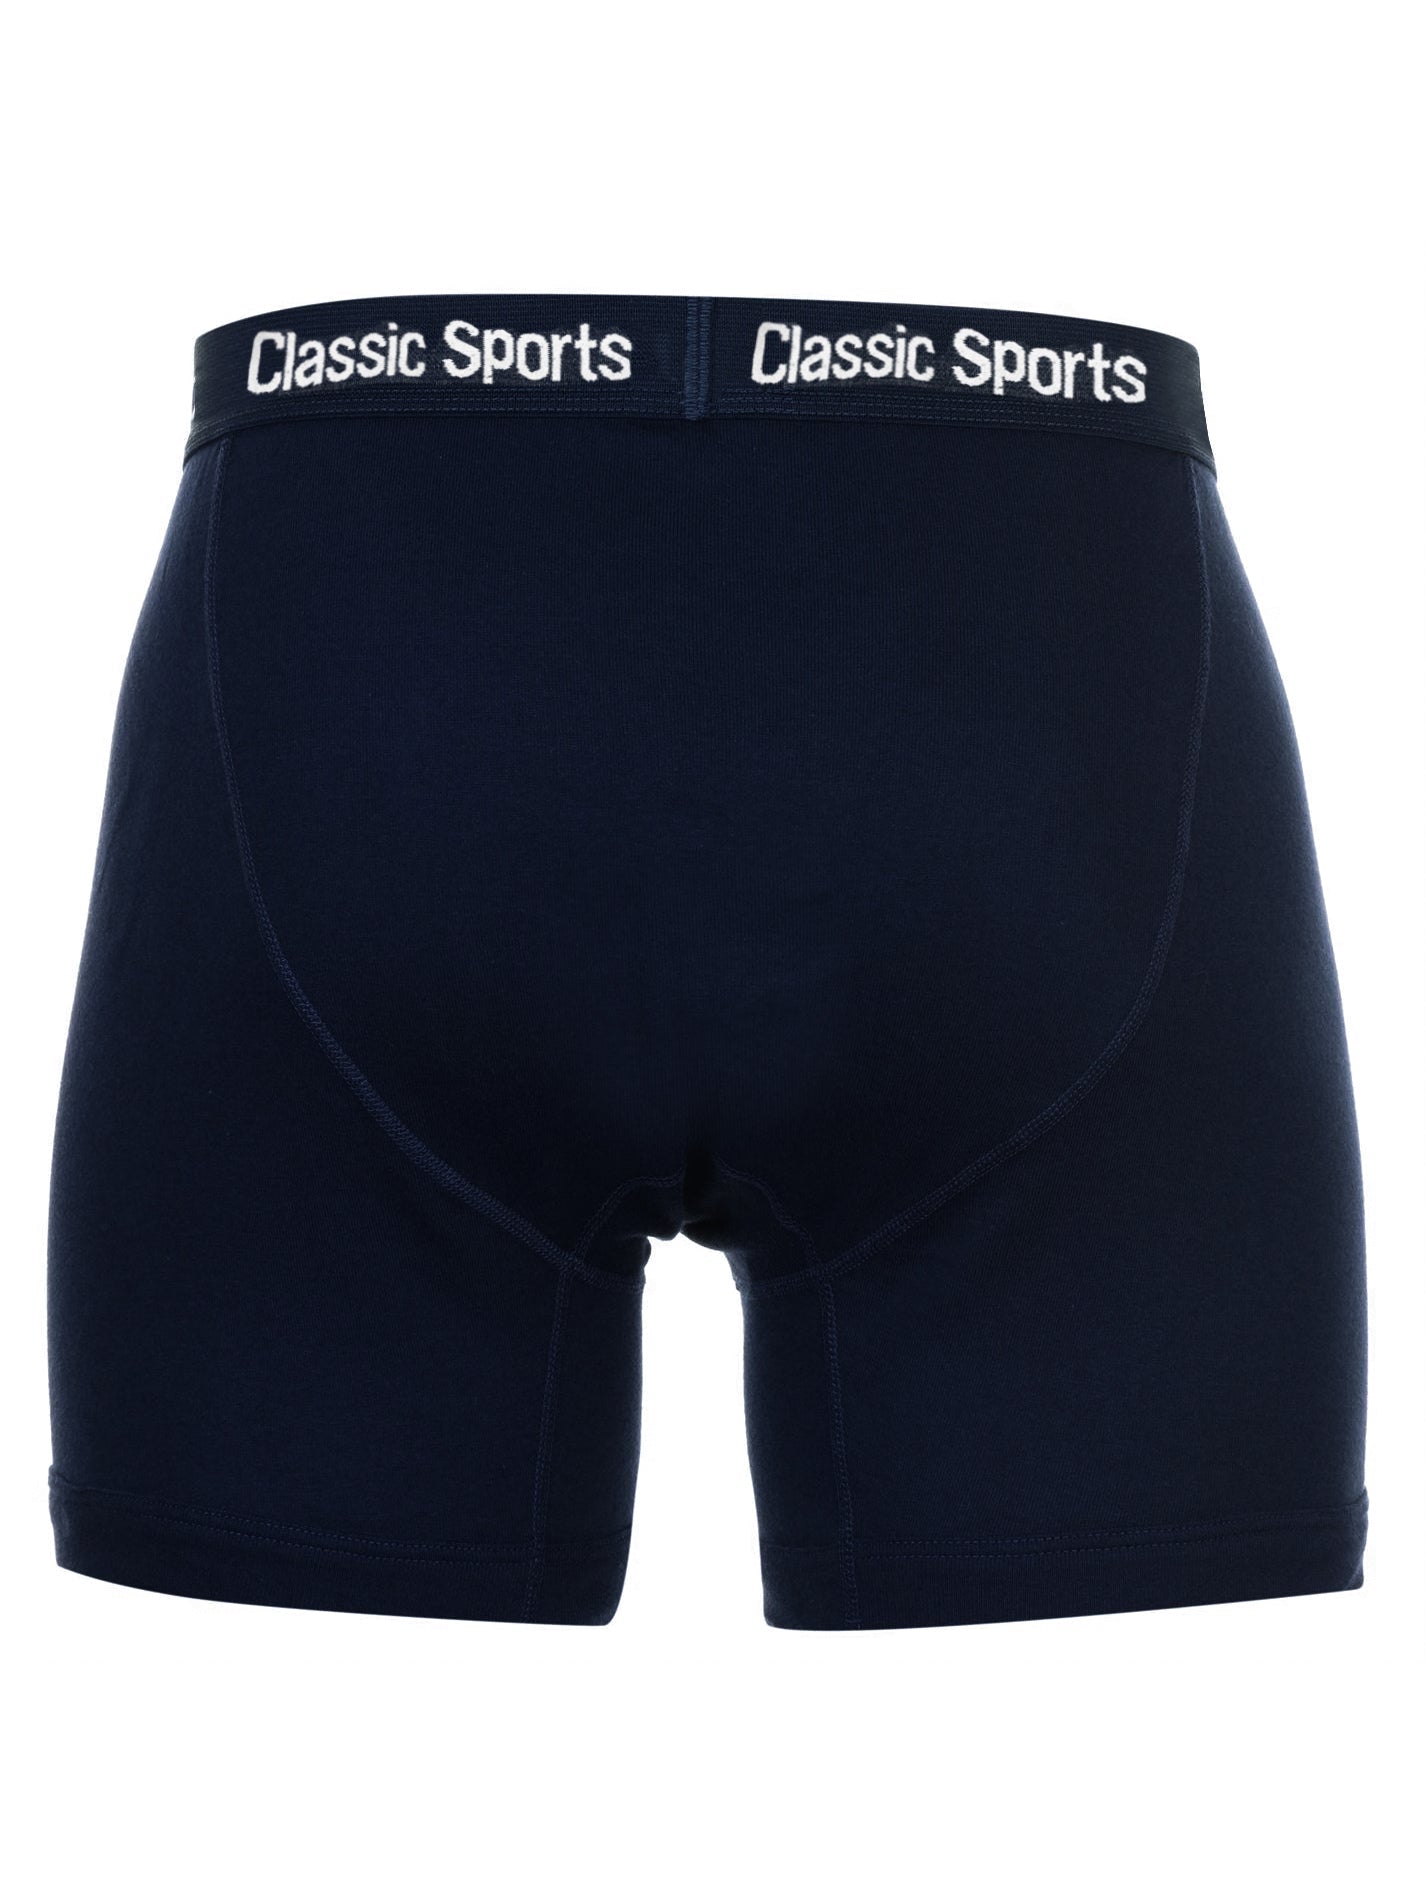 Classic Sport Single Jersey Boxer Brief For Men-Dark Navy-BR800